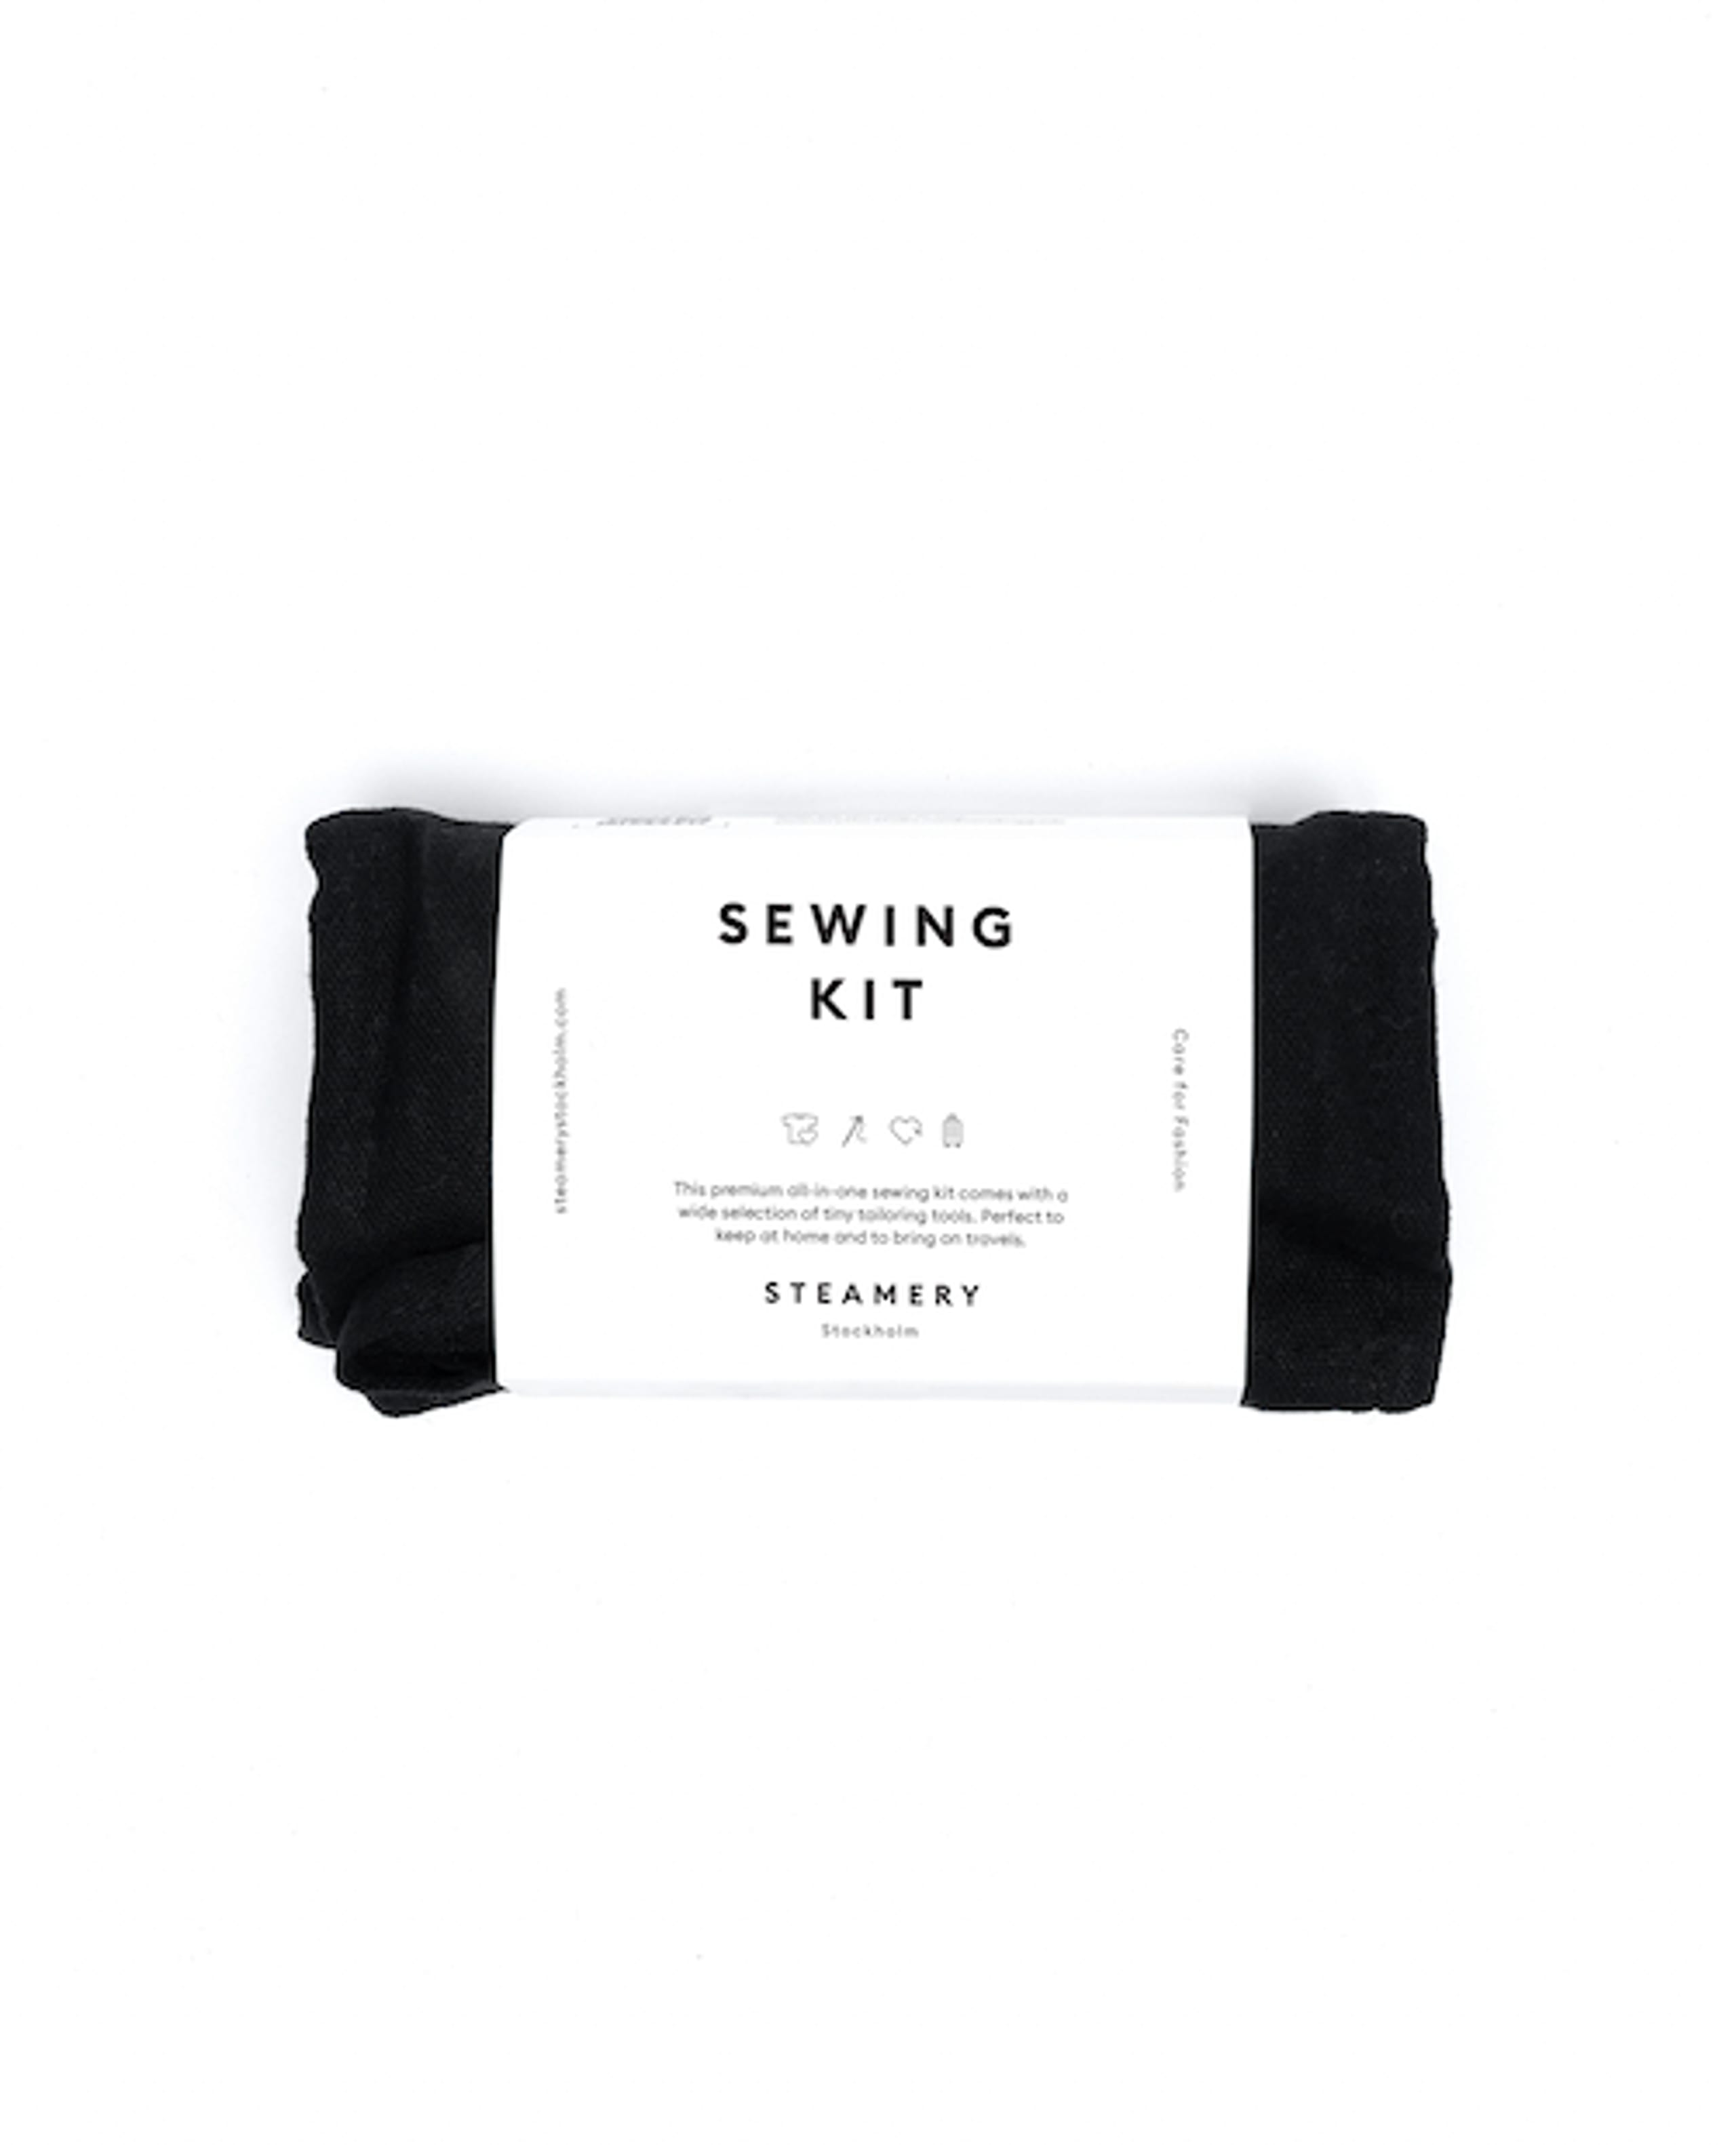 STEAMERY - Detergent - Sewing Kit  - Black